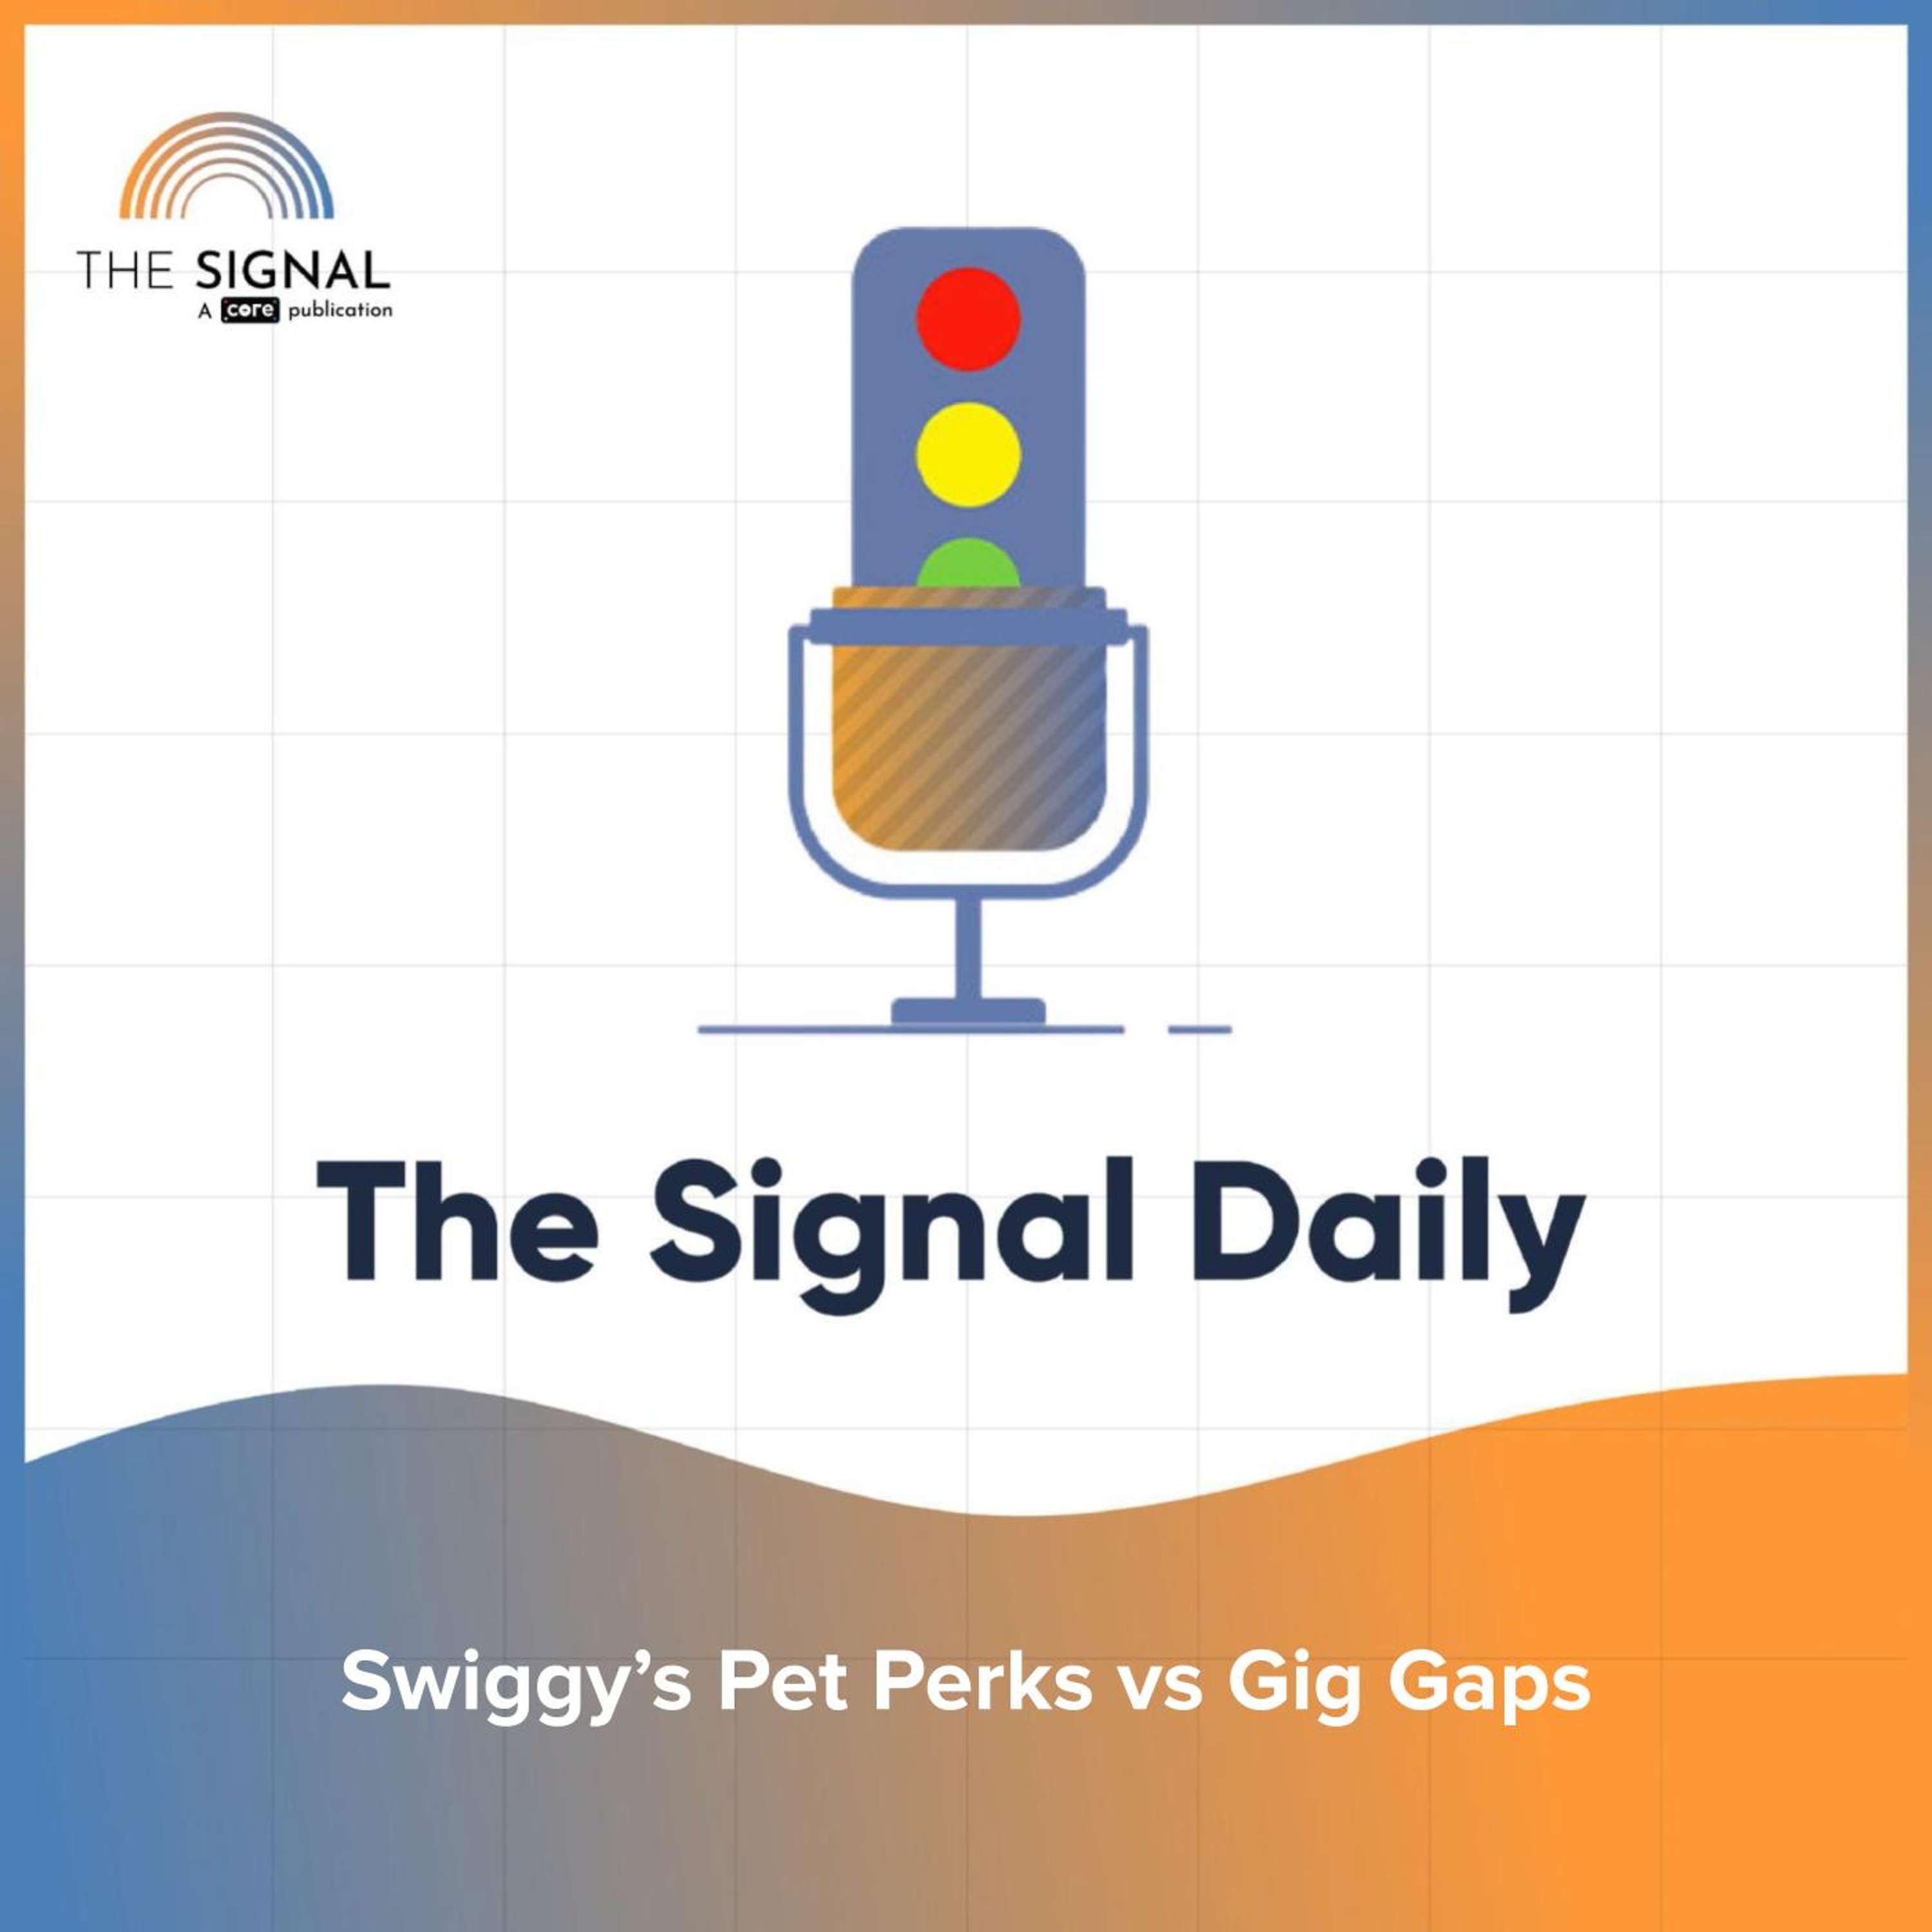 Swiggy’s Pet Perks vs Gig Gaps